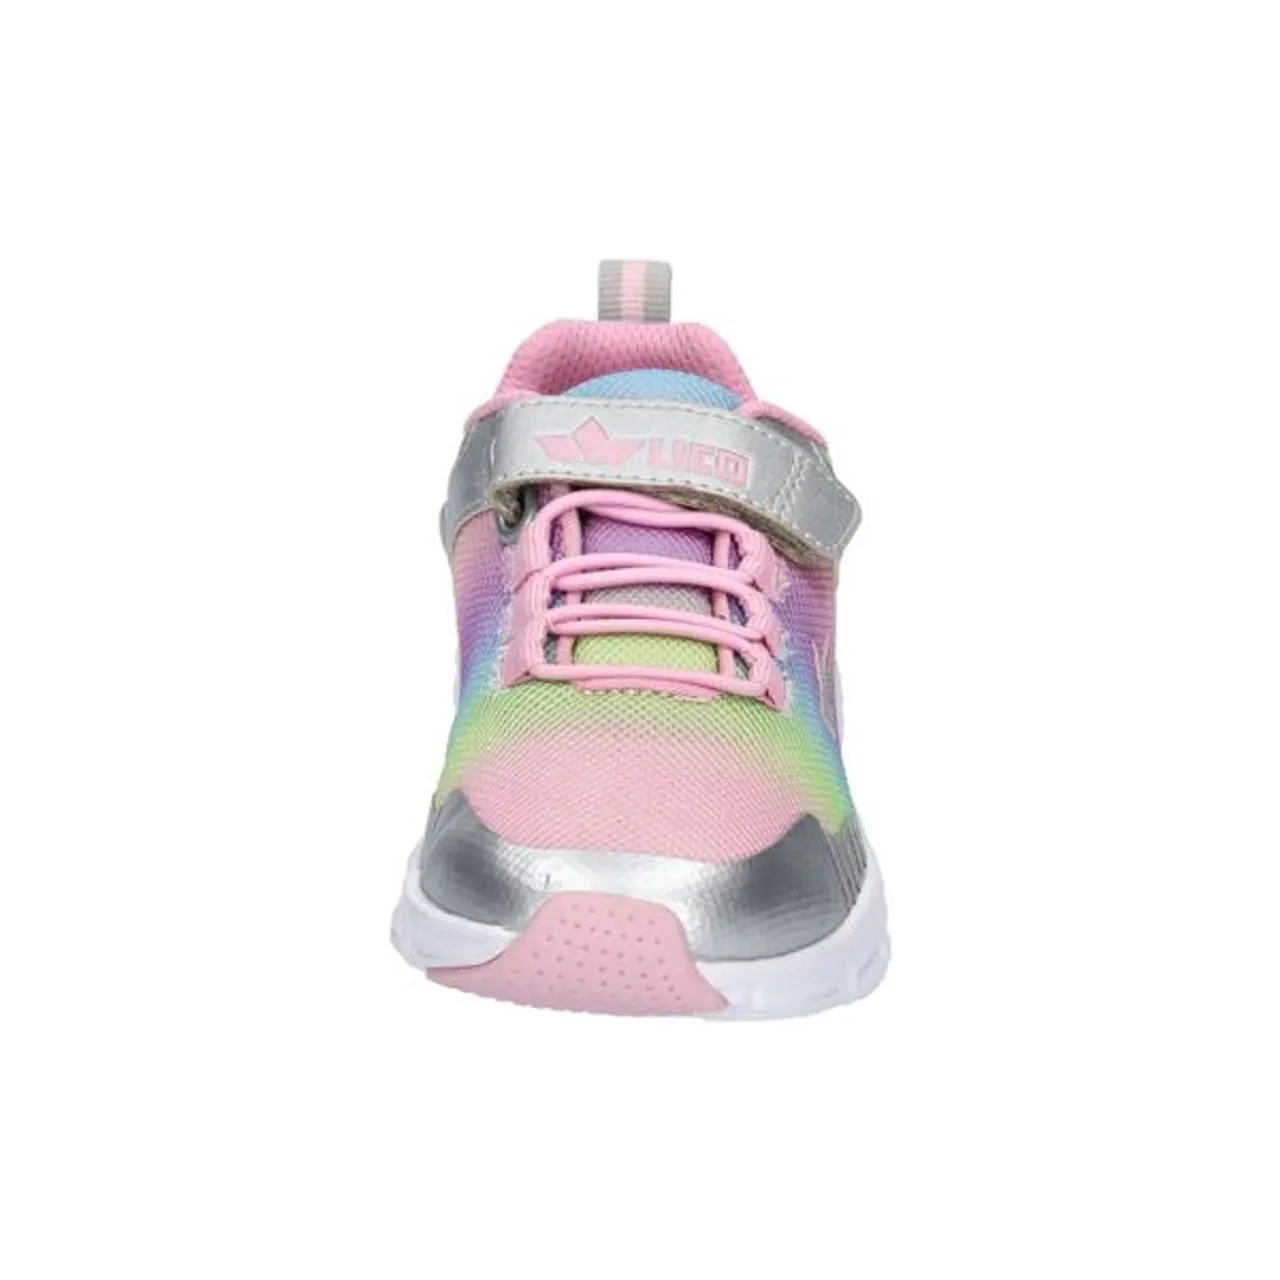 Sneaker LICO "Freizeitschuh Namur VS" Gr. 37, rosa Kinder Schuhe Sneaker